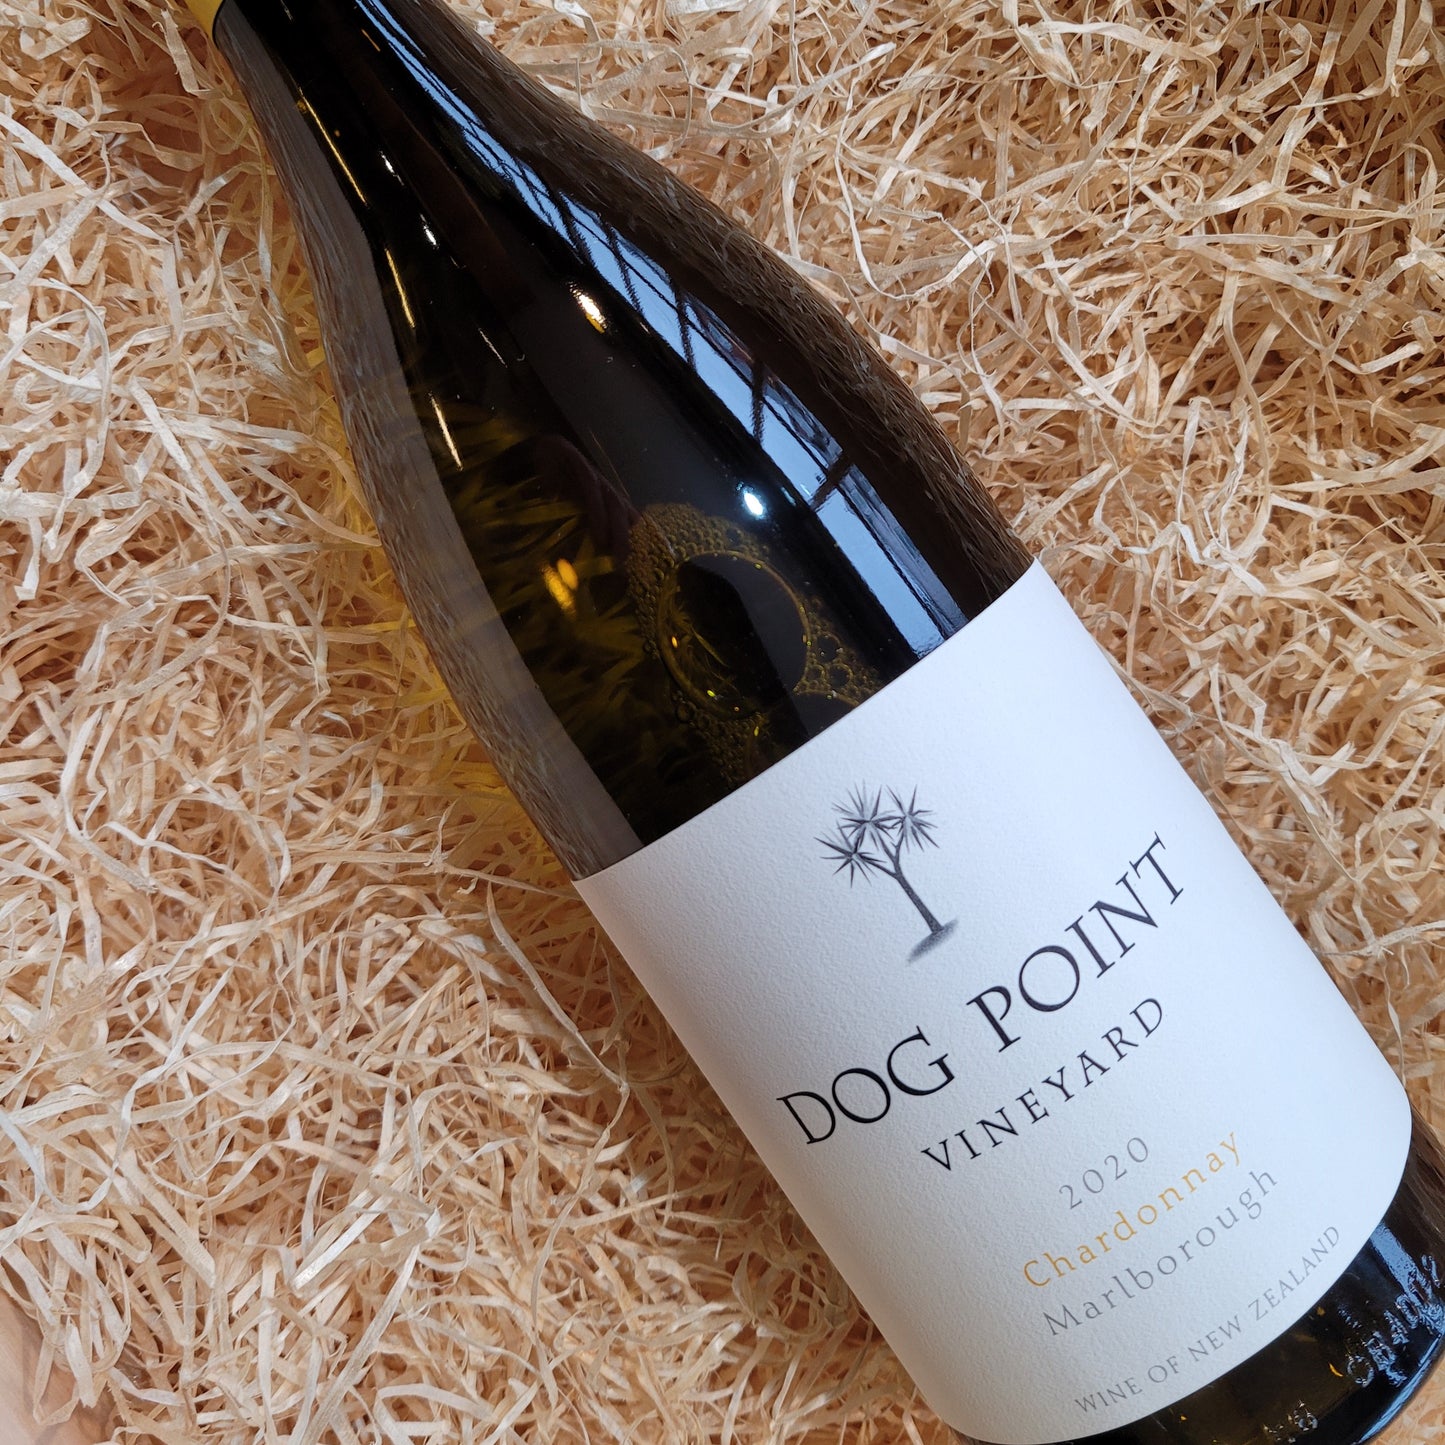 Dog Point Chardonnay, Marlborough, New Zealand 2020 (13.5% Vol)